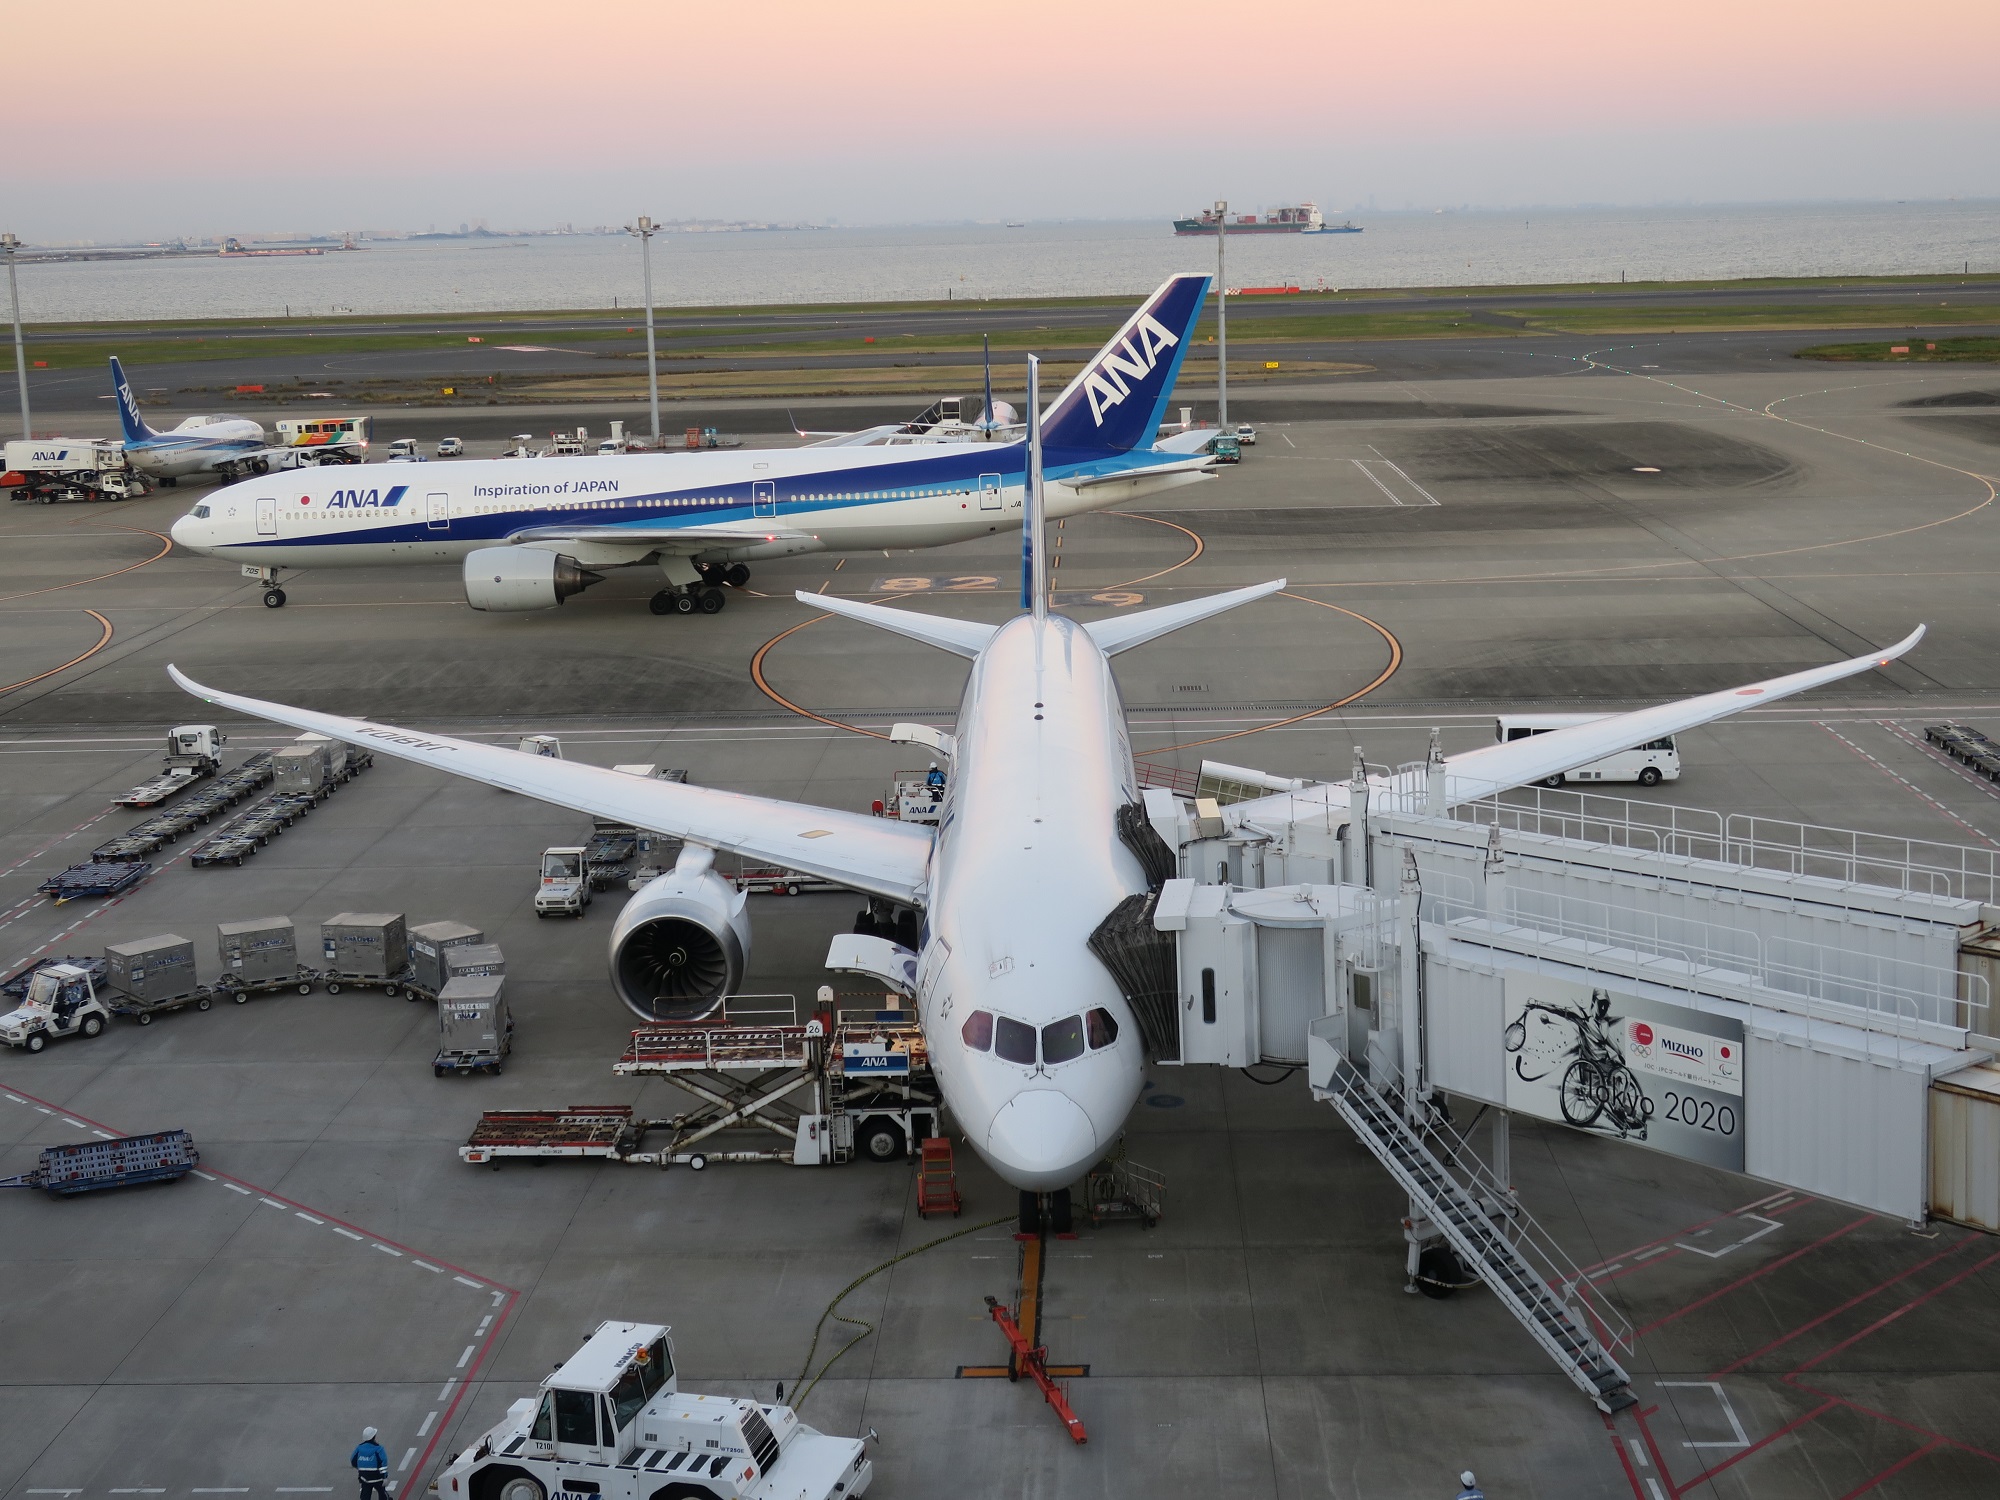 B787とB777-200 羽田空港にて撮影 Canon PowerShot G9Xで撮影